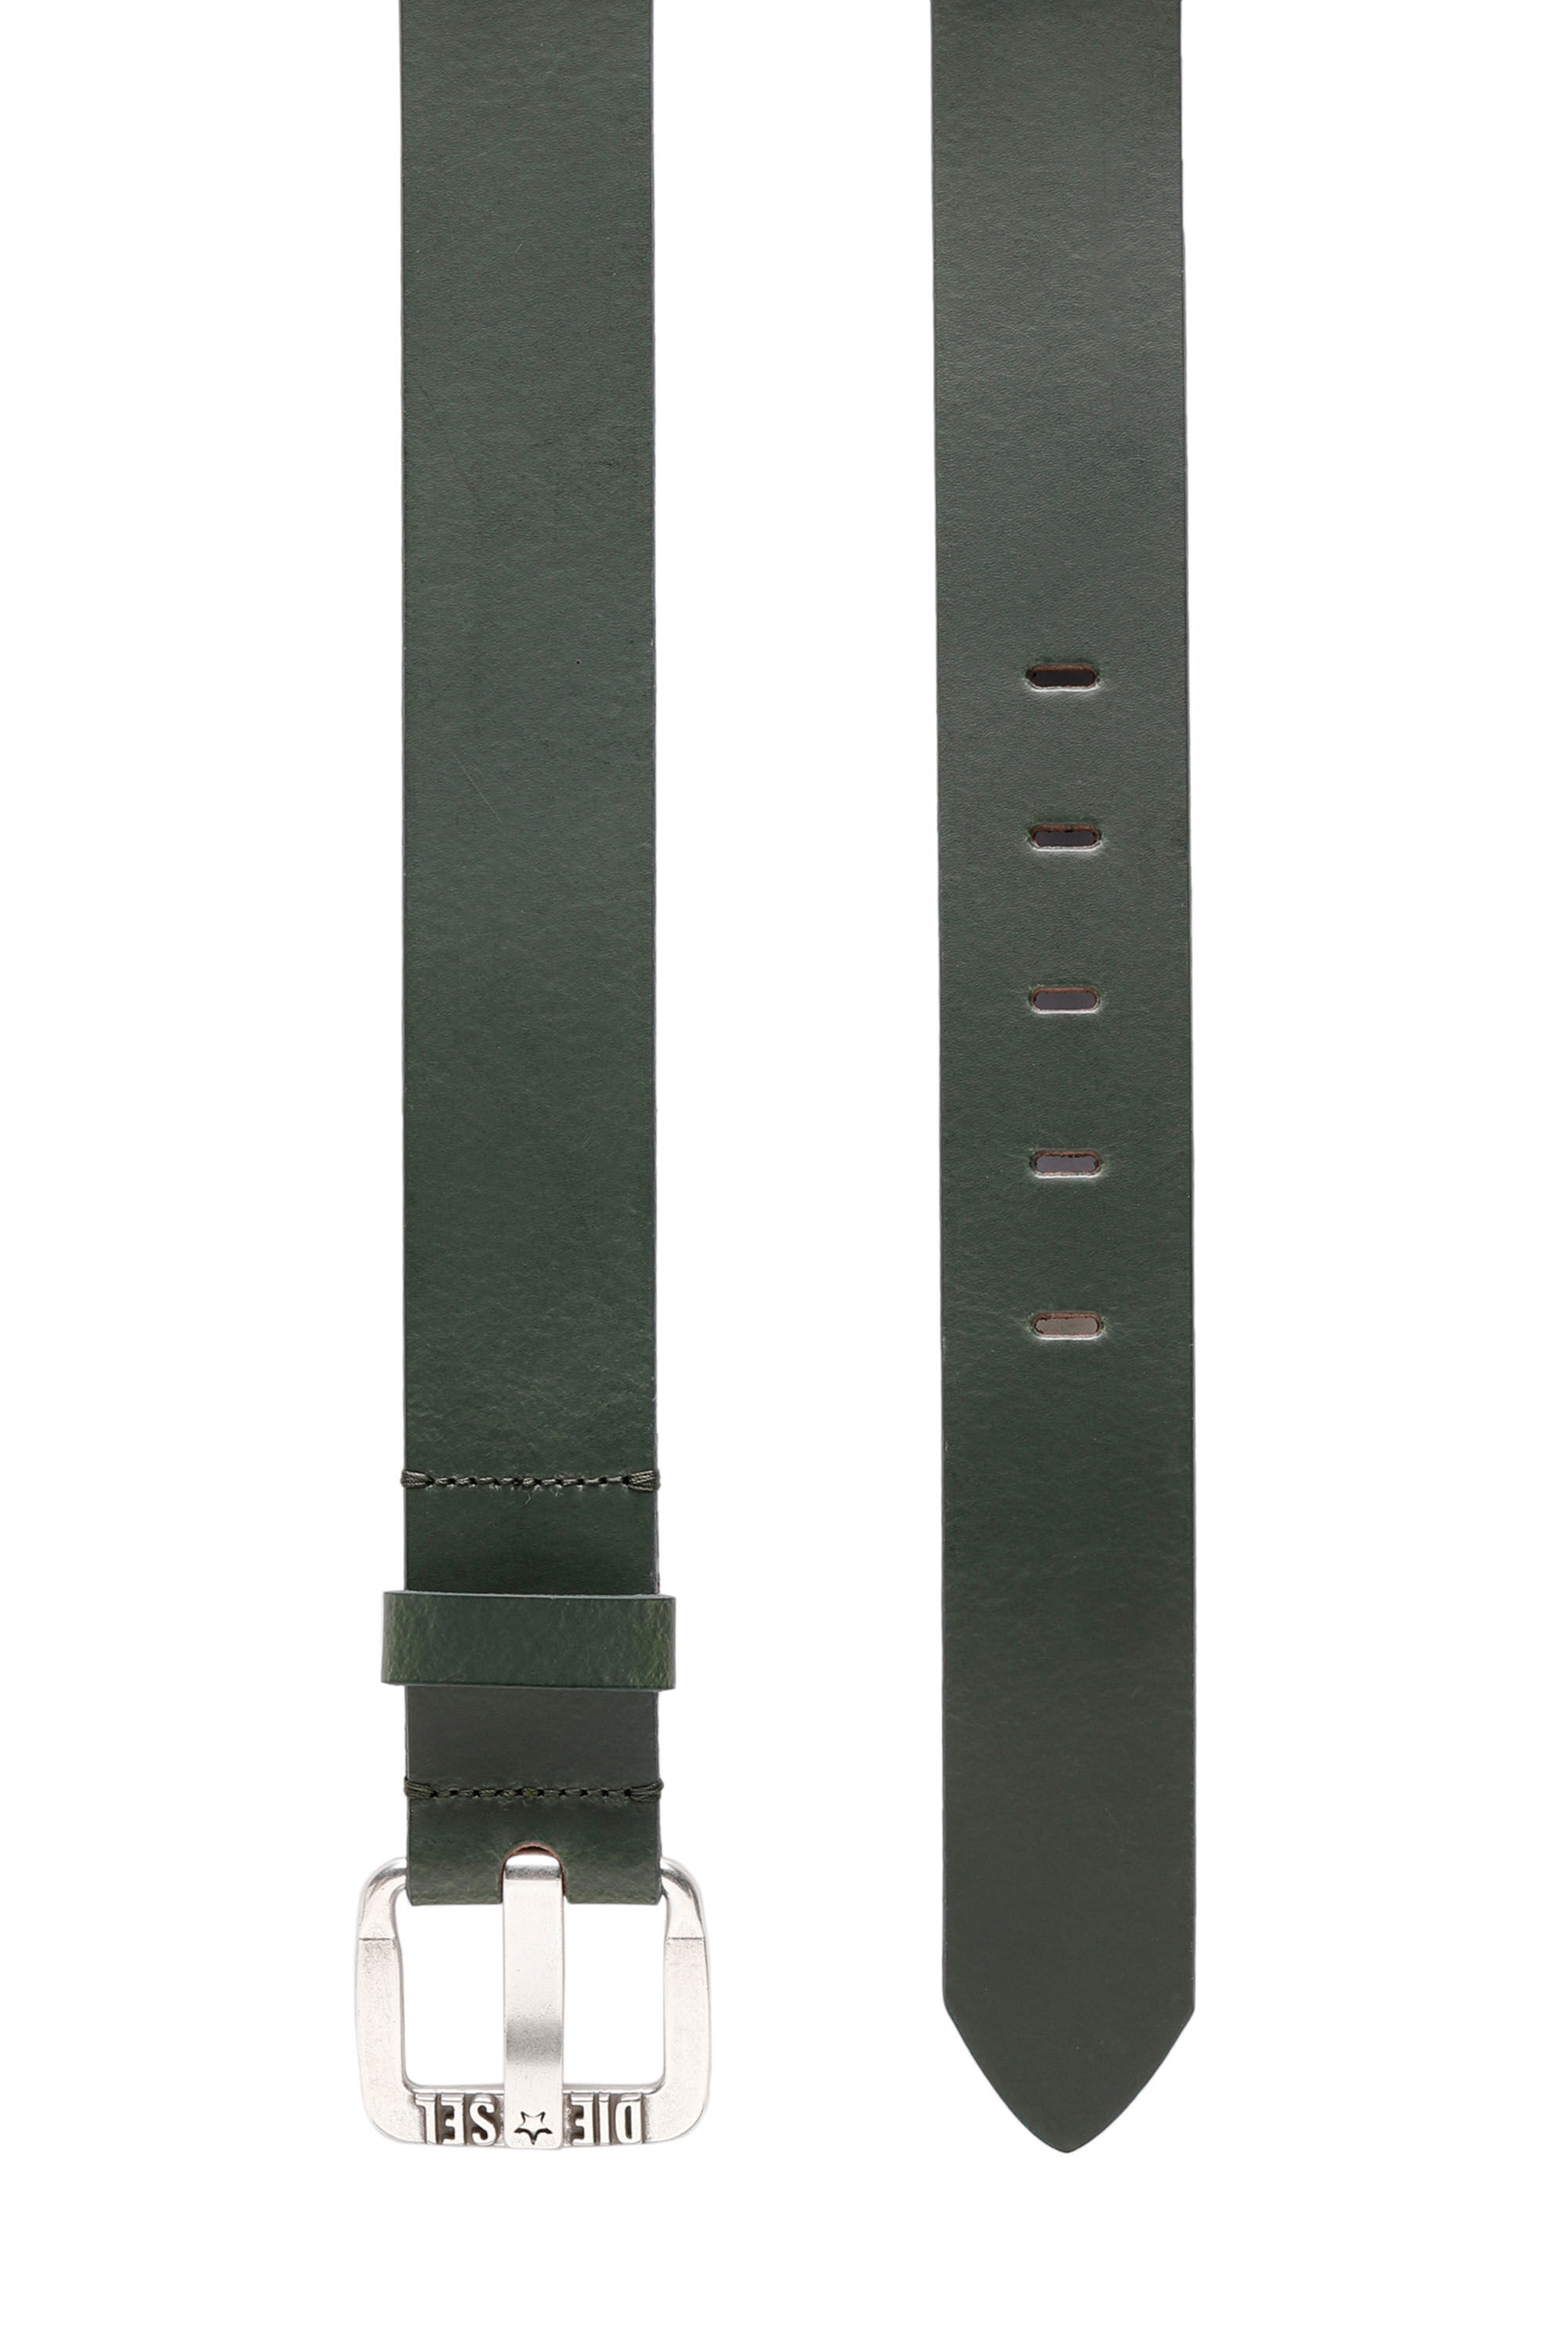 B-STAR II Man: Leather belt with metal star logo buckle | Diesel